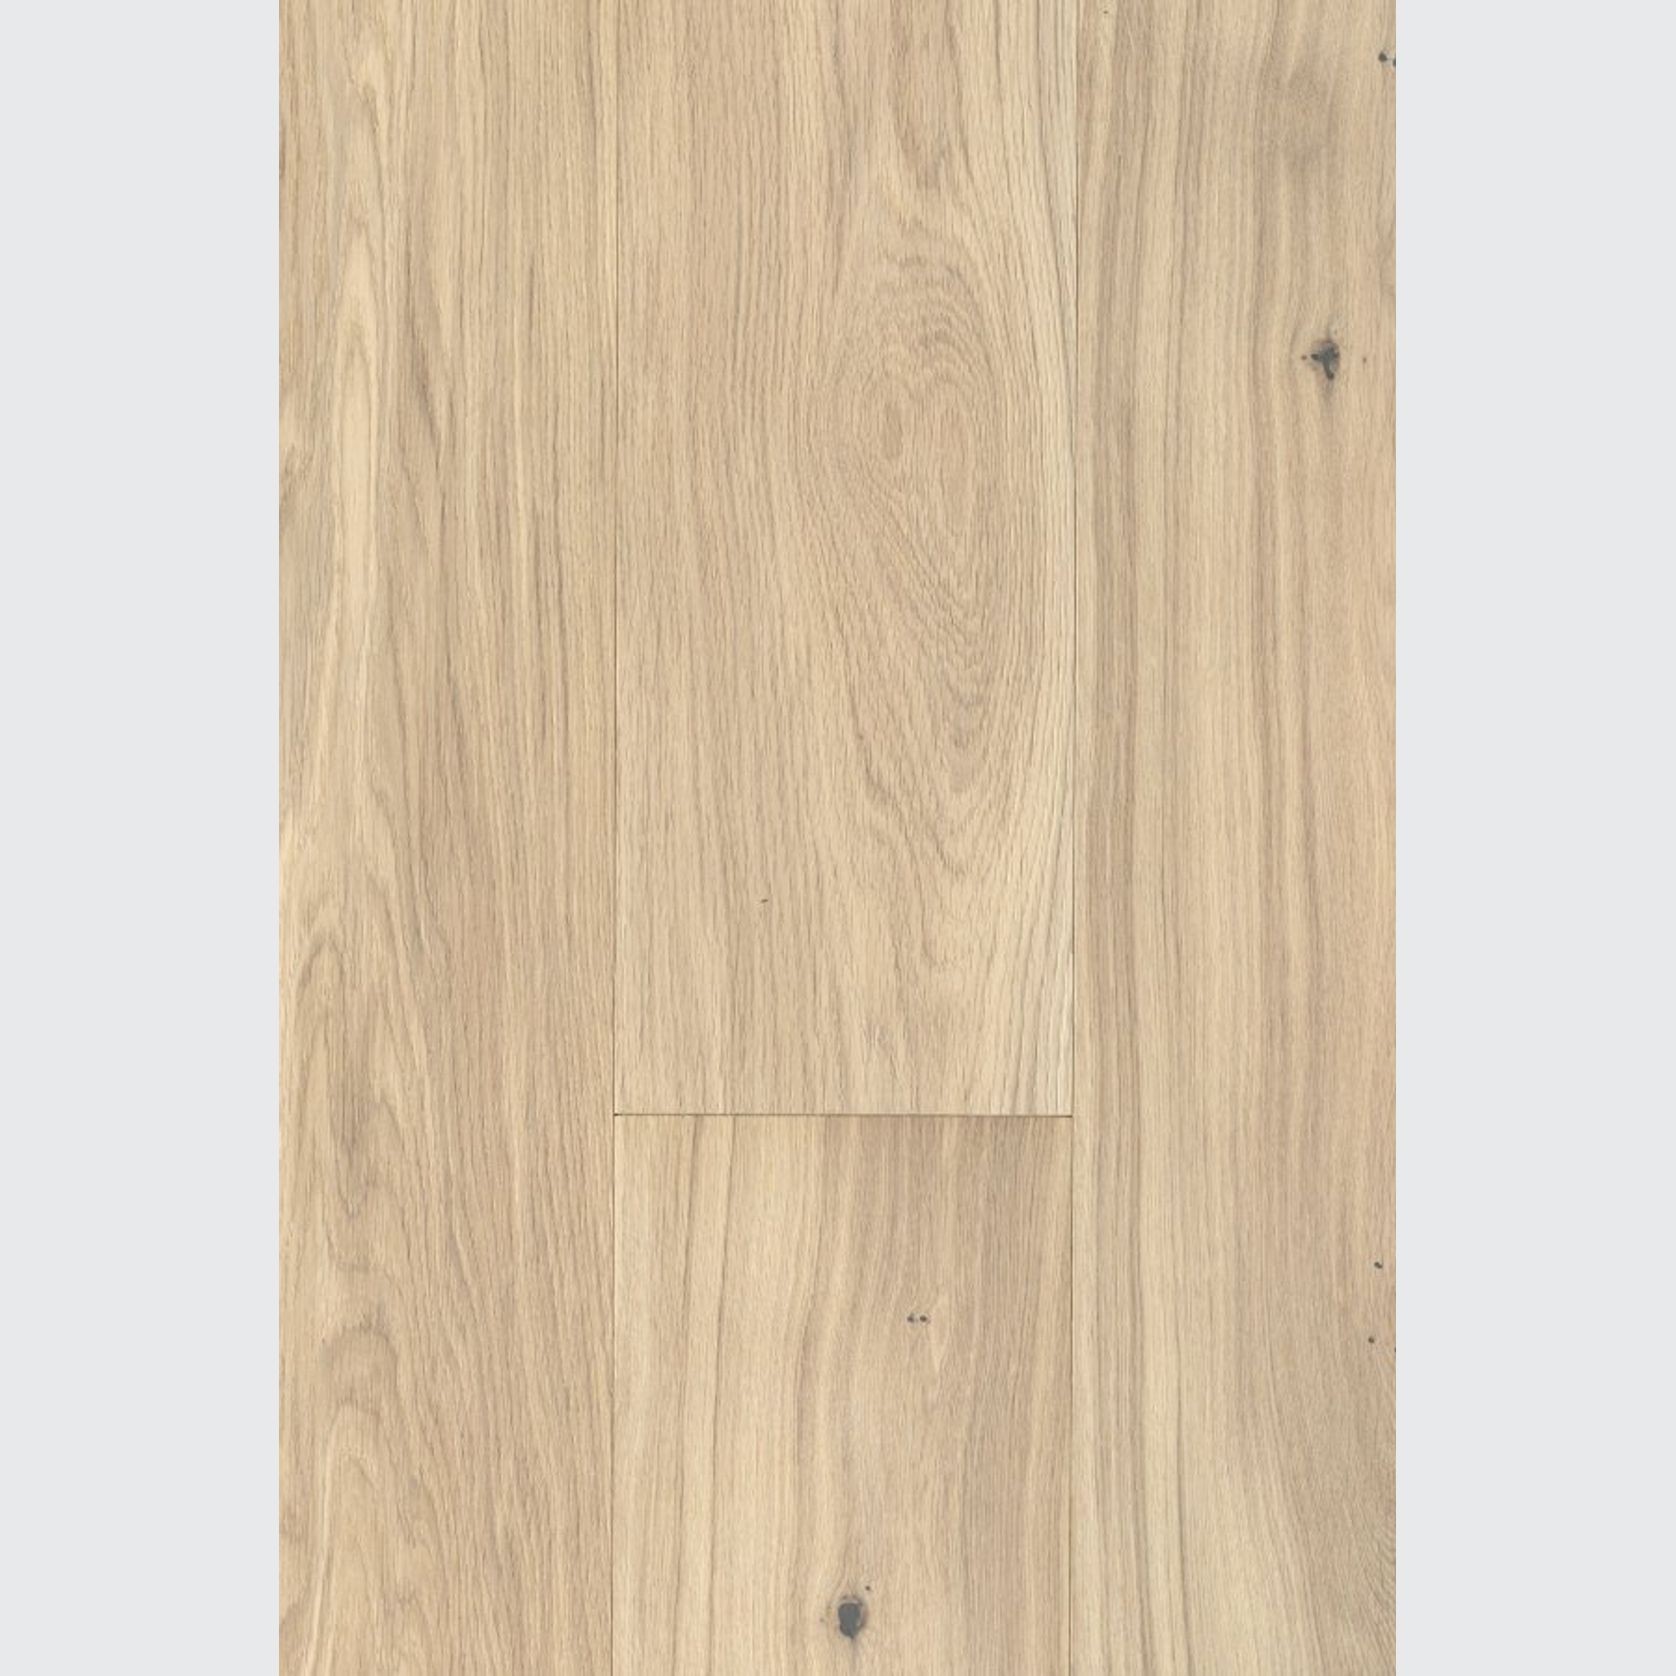 Moda Altro Capri Feature Plank Timber Flooring gallery detail image